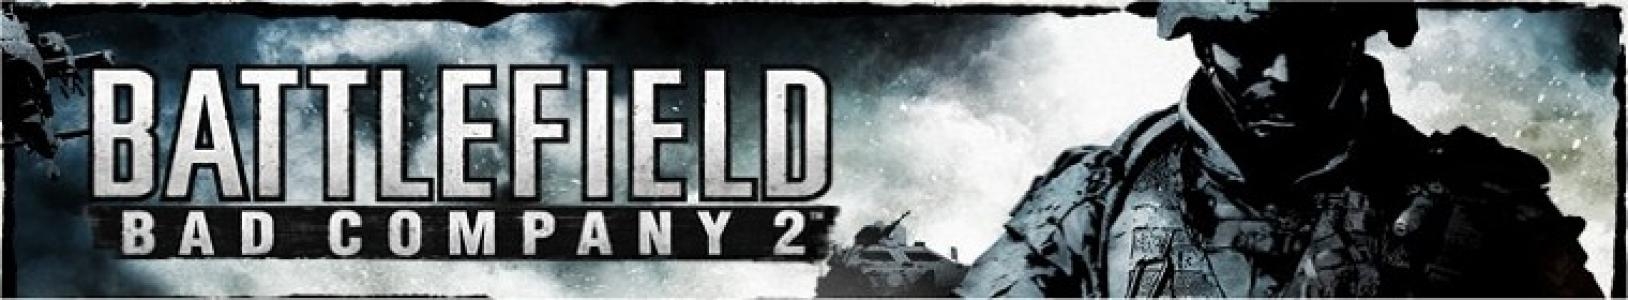 Battlefield: Bad Company 2 banner